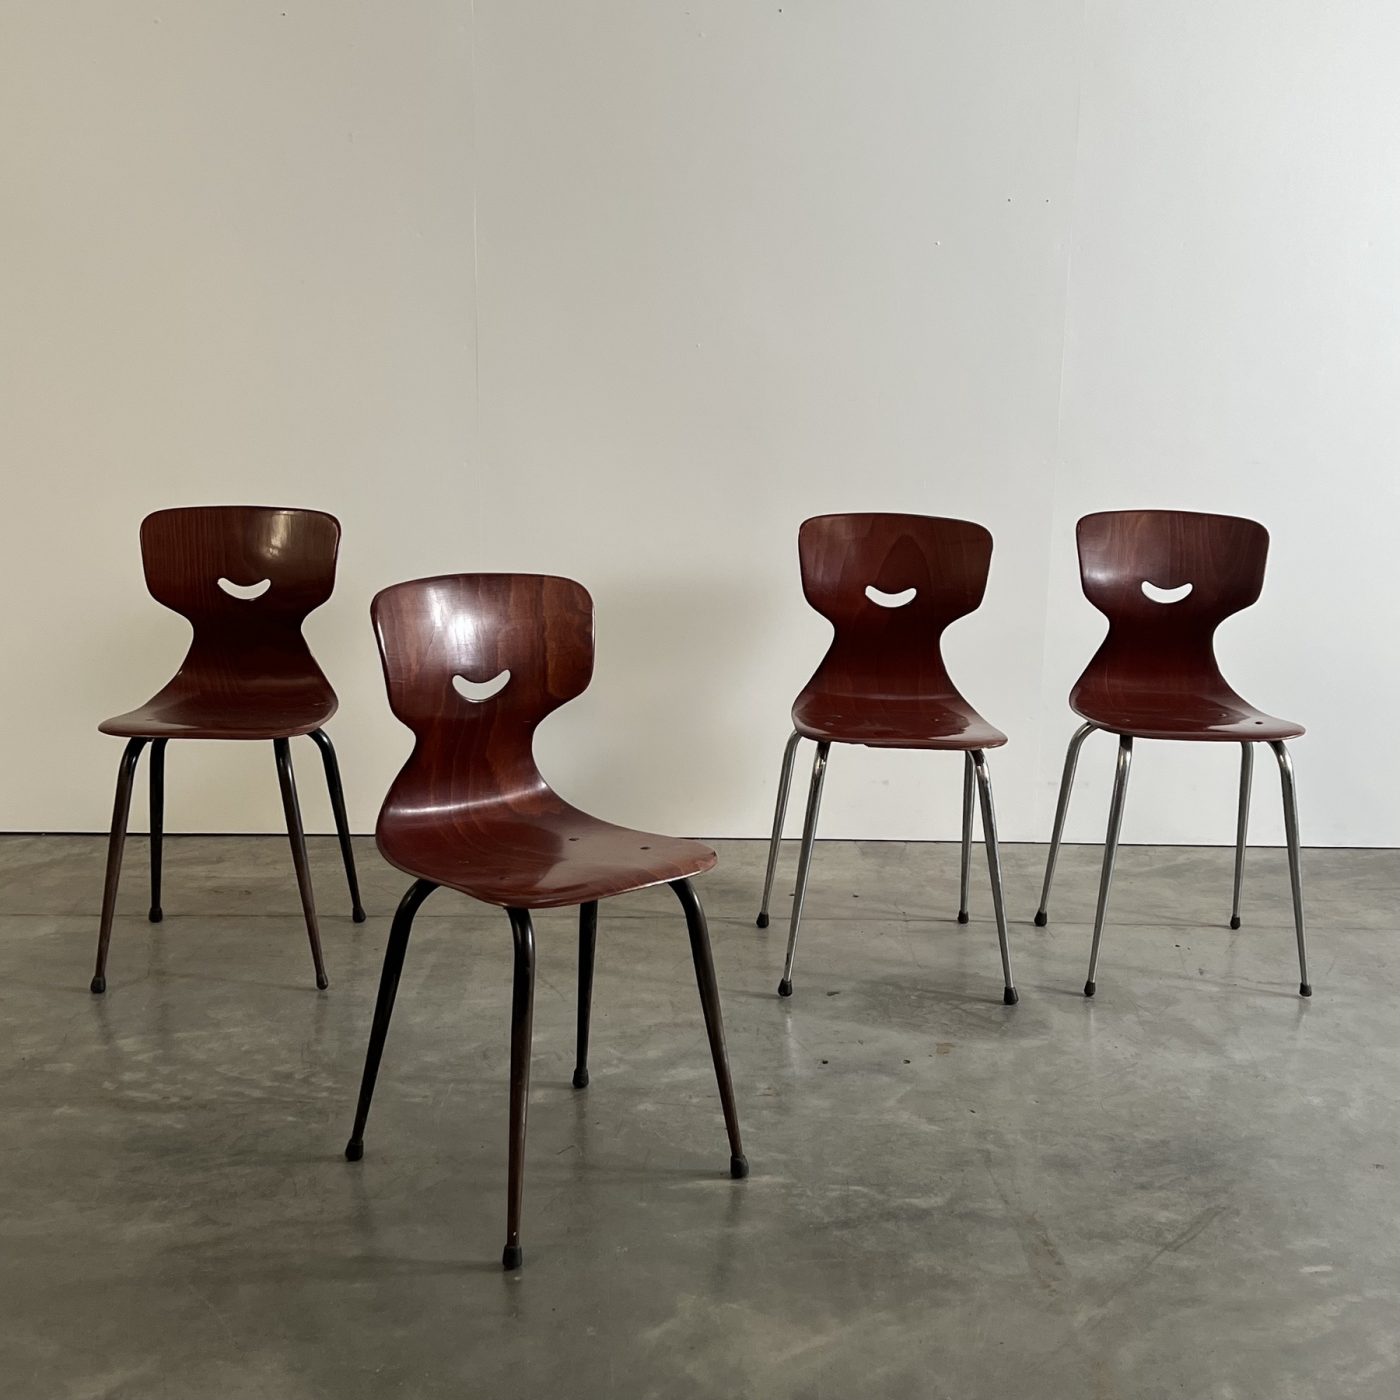 objet-vintage-chairs0006